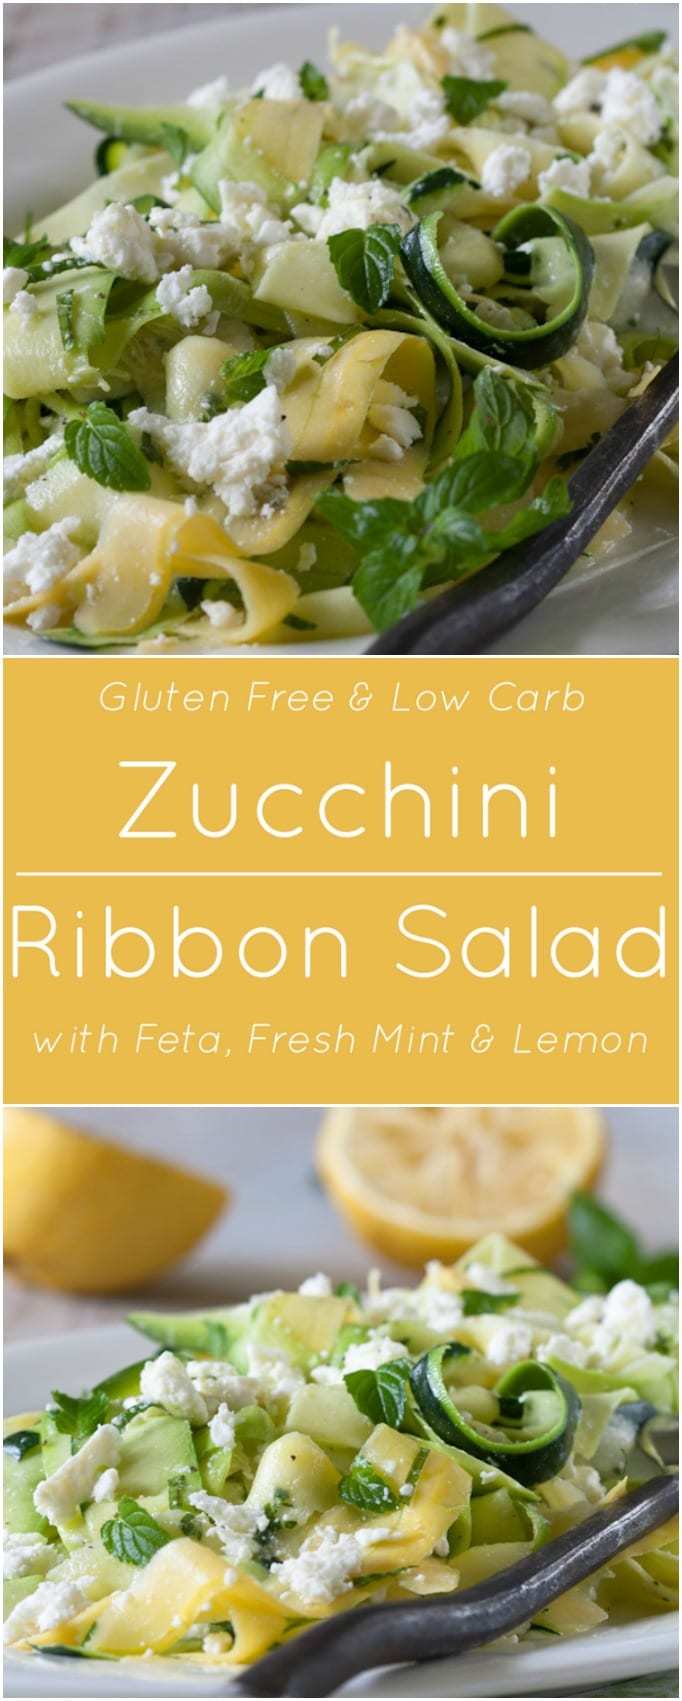 Zucchini Ribbon Salad with Feta, Fresh Mint and Lemon.